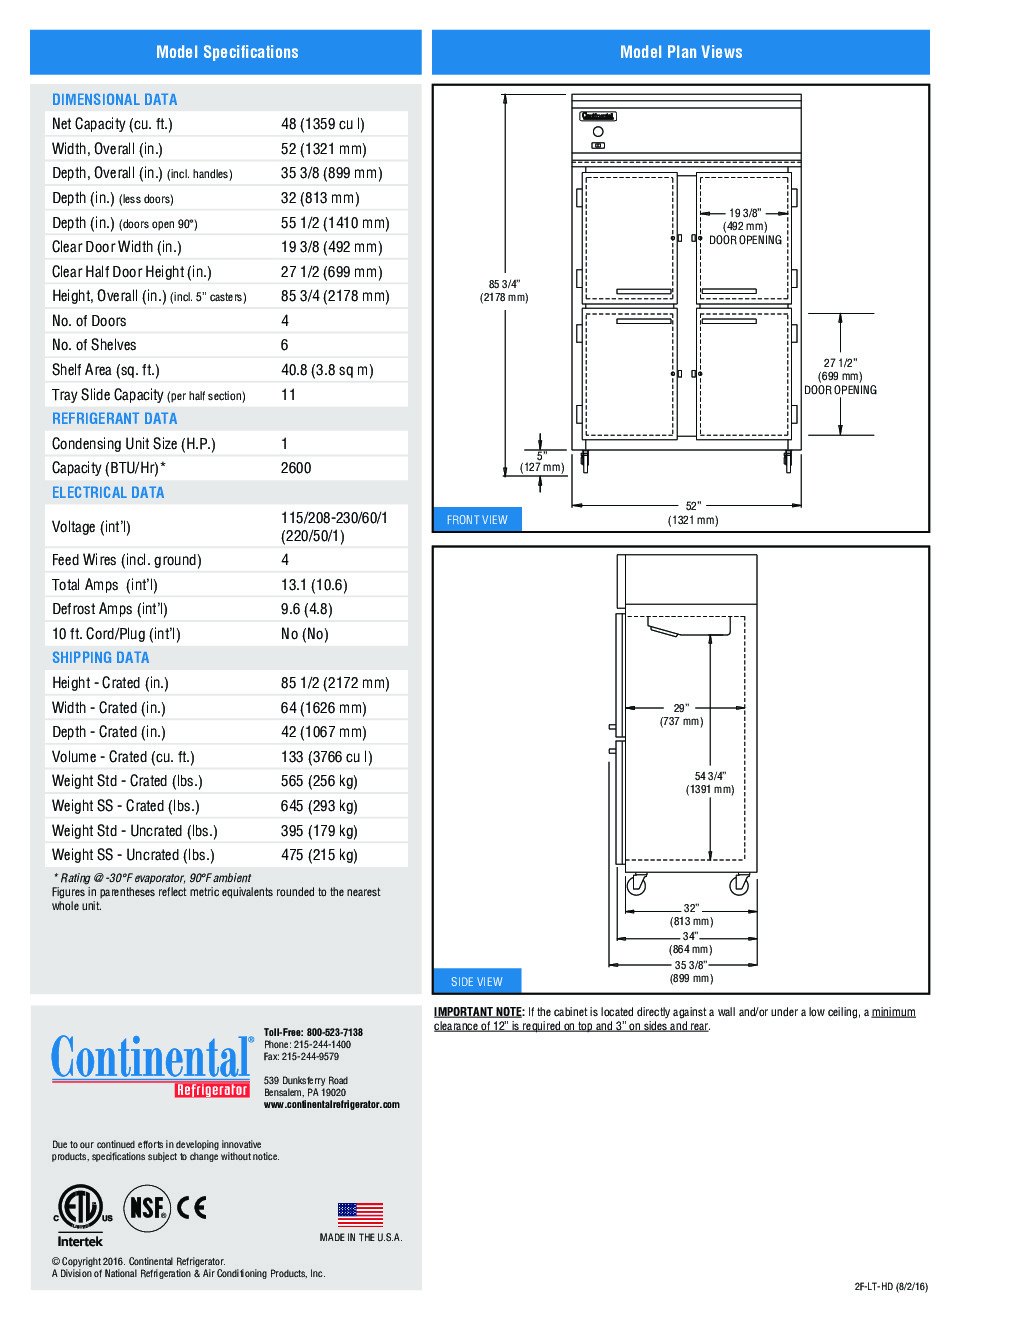 Continental Refrigerator 2F-LT-SA-HD Reach-In Low Temperature Freezer